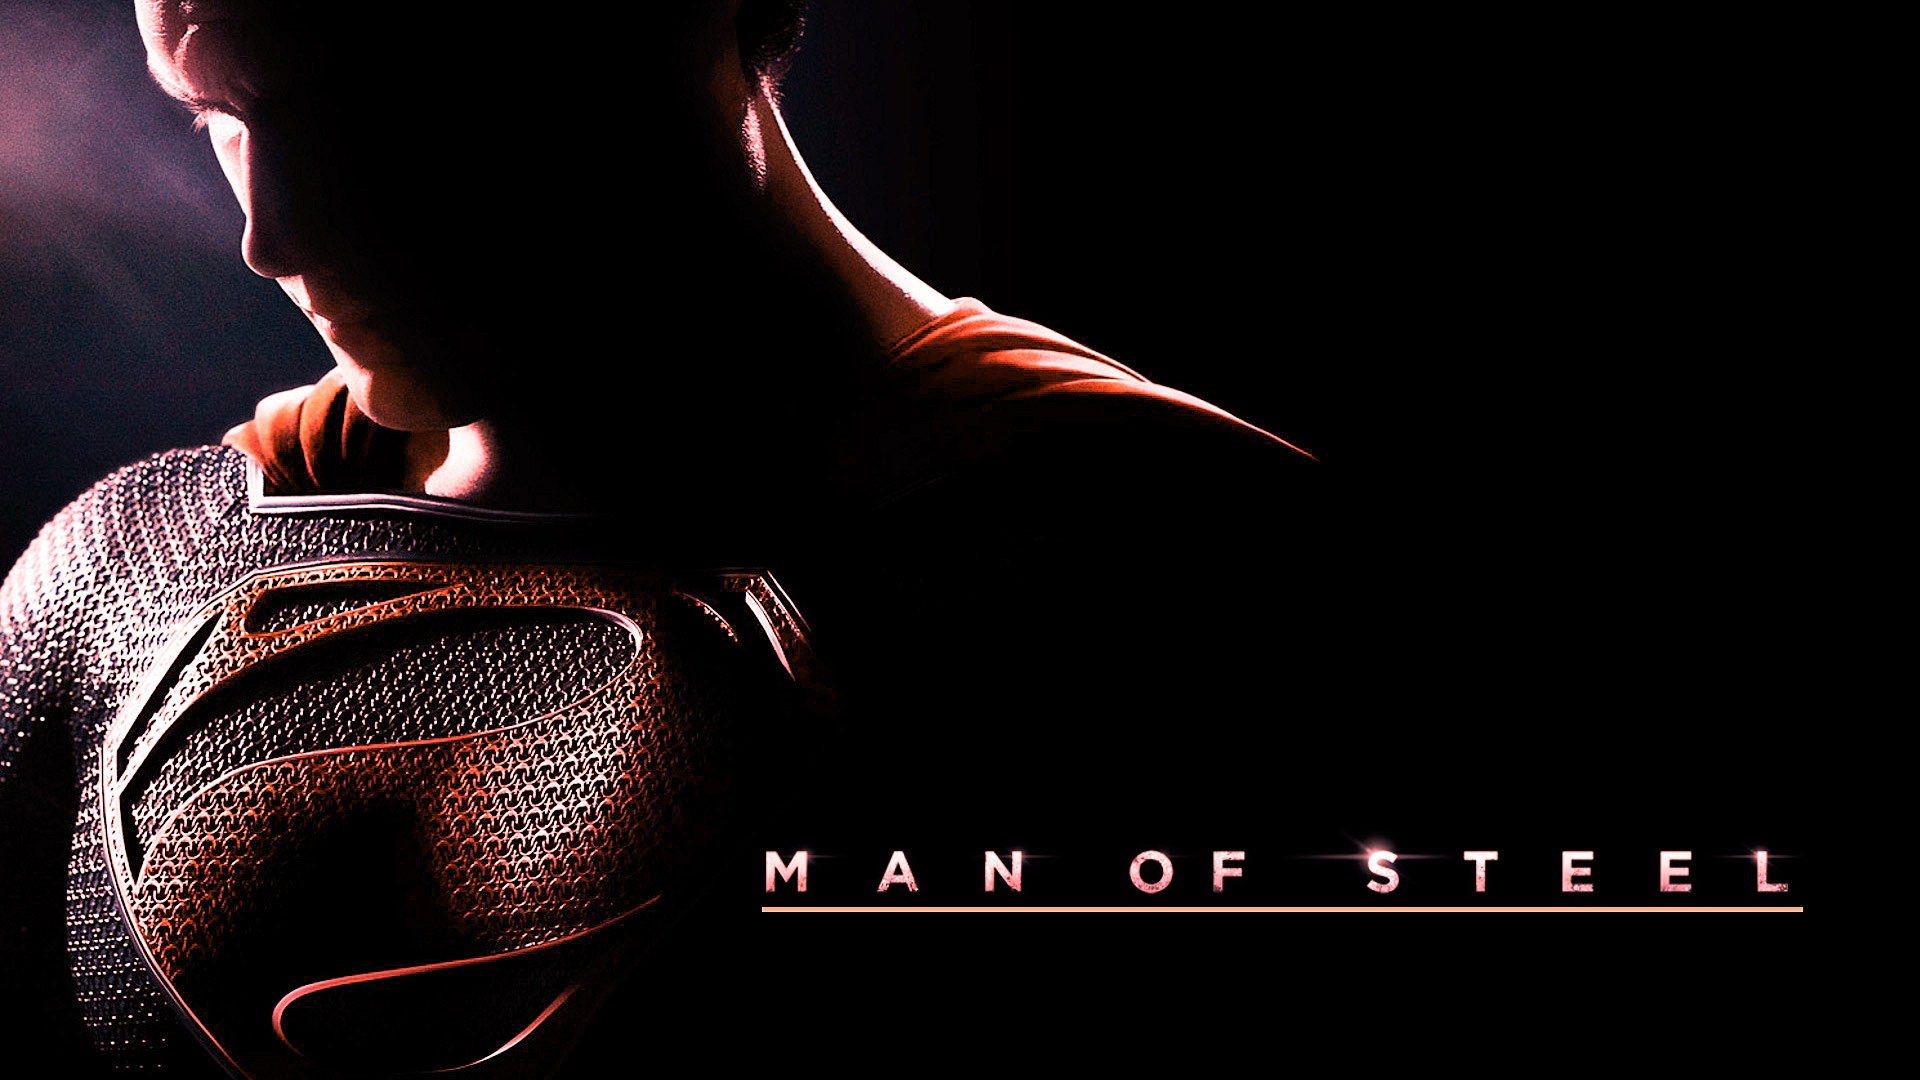 superman man of steel wallpaper 3d